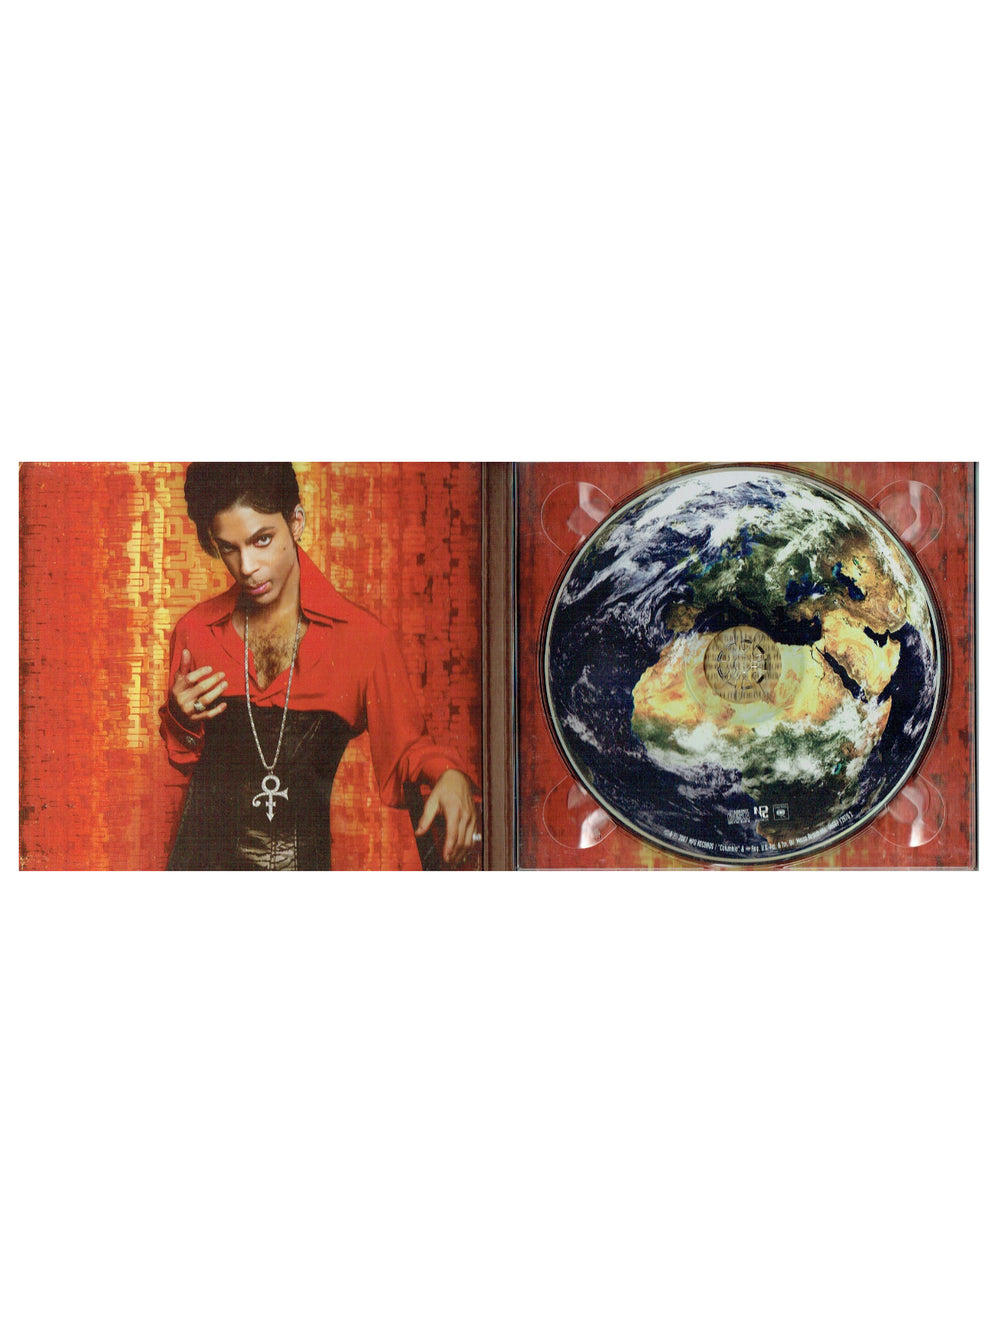 Prince – Planet Earth Original Commercial 2007 EU Release Gatefold Sleeve SEALED